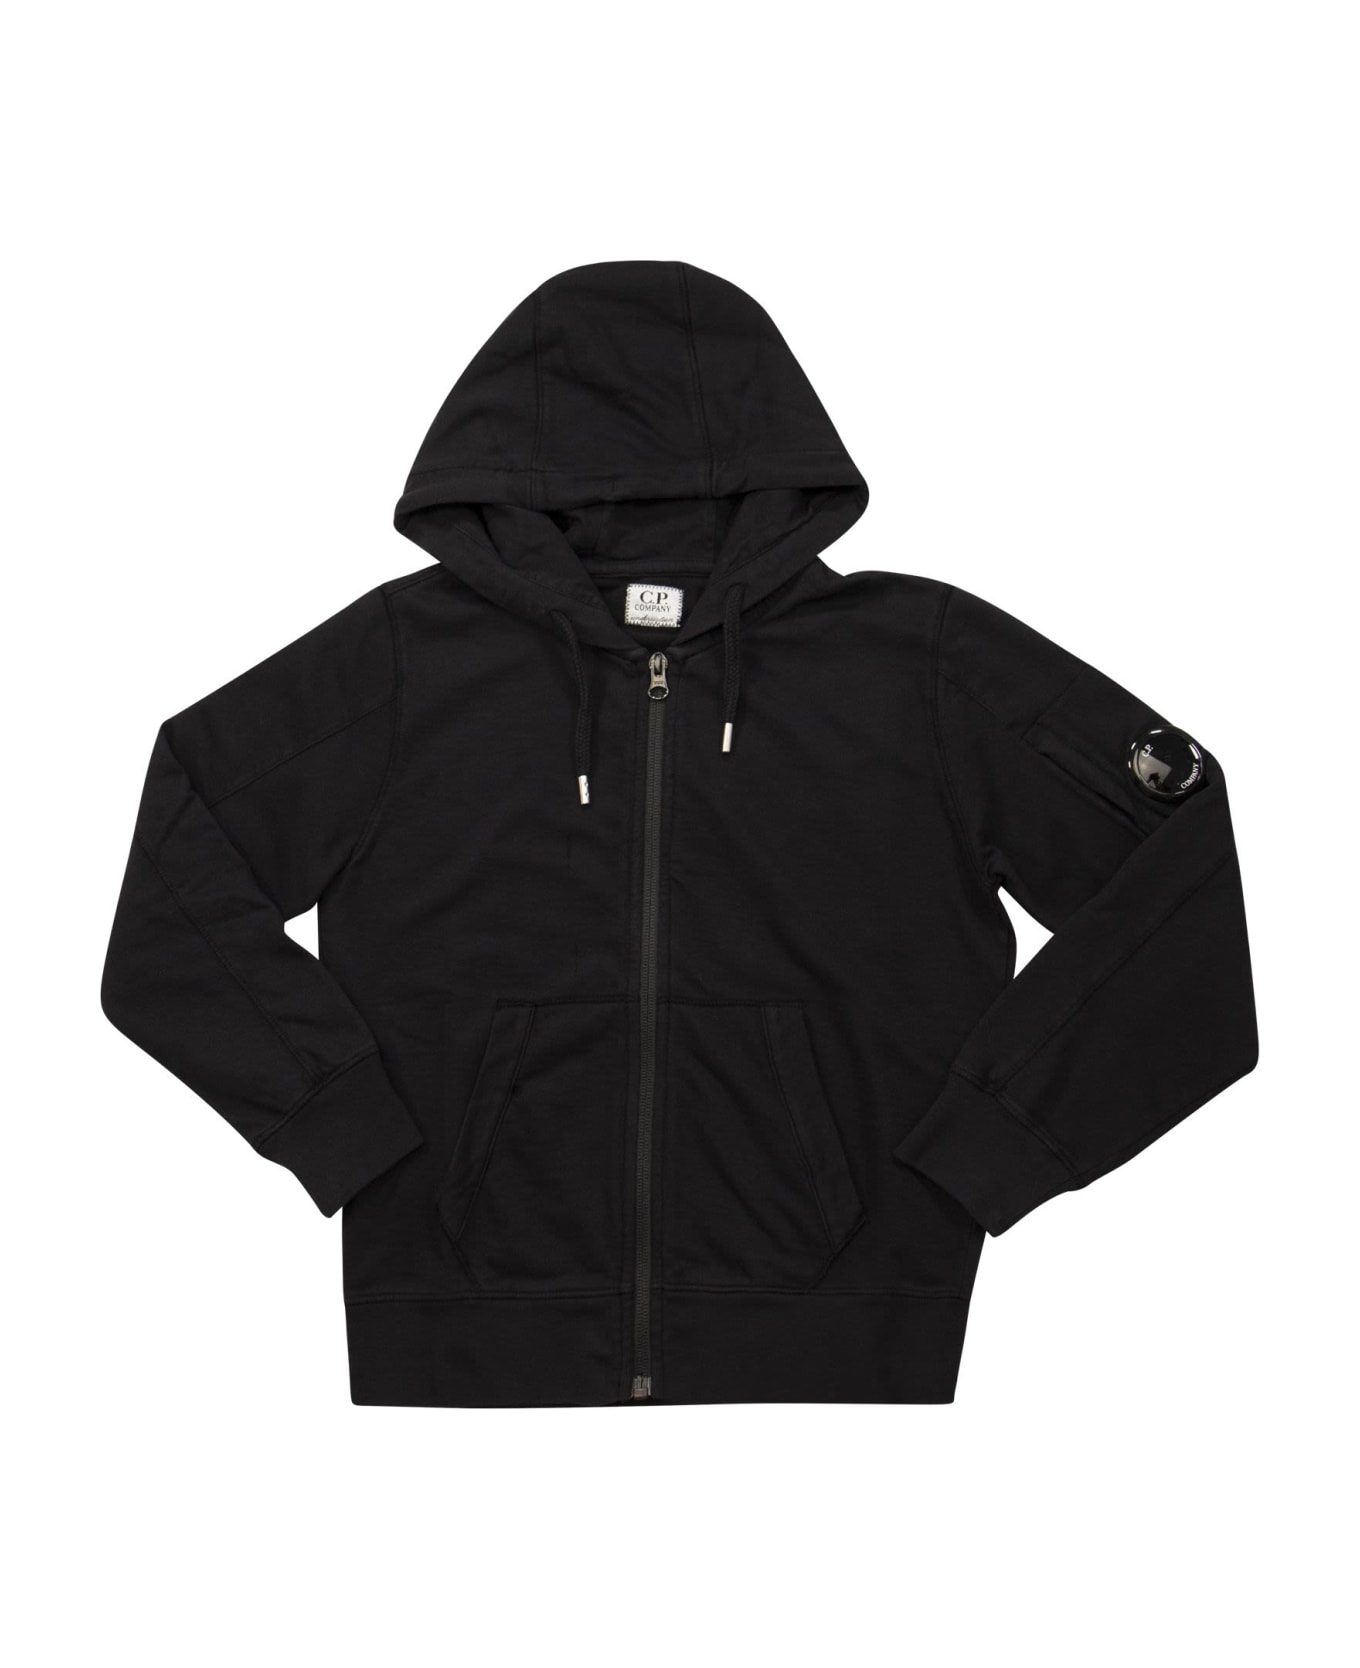 C.P. Company Hooded Sweatshirt - Black